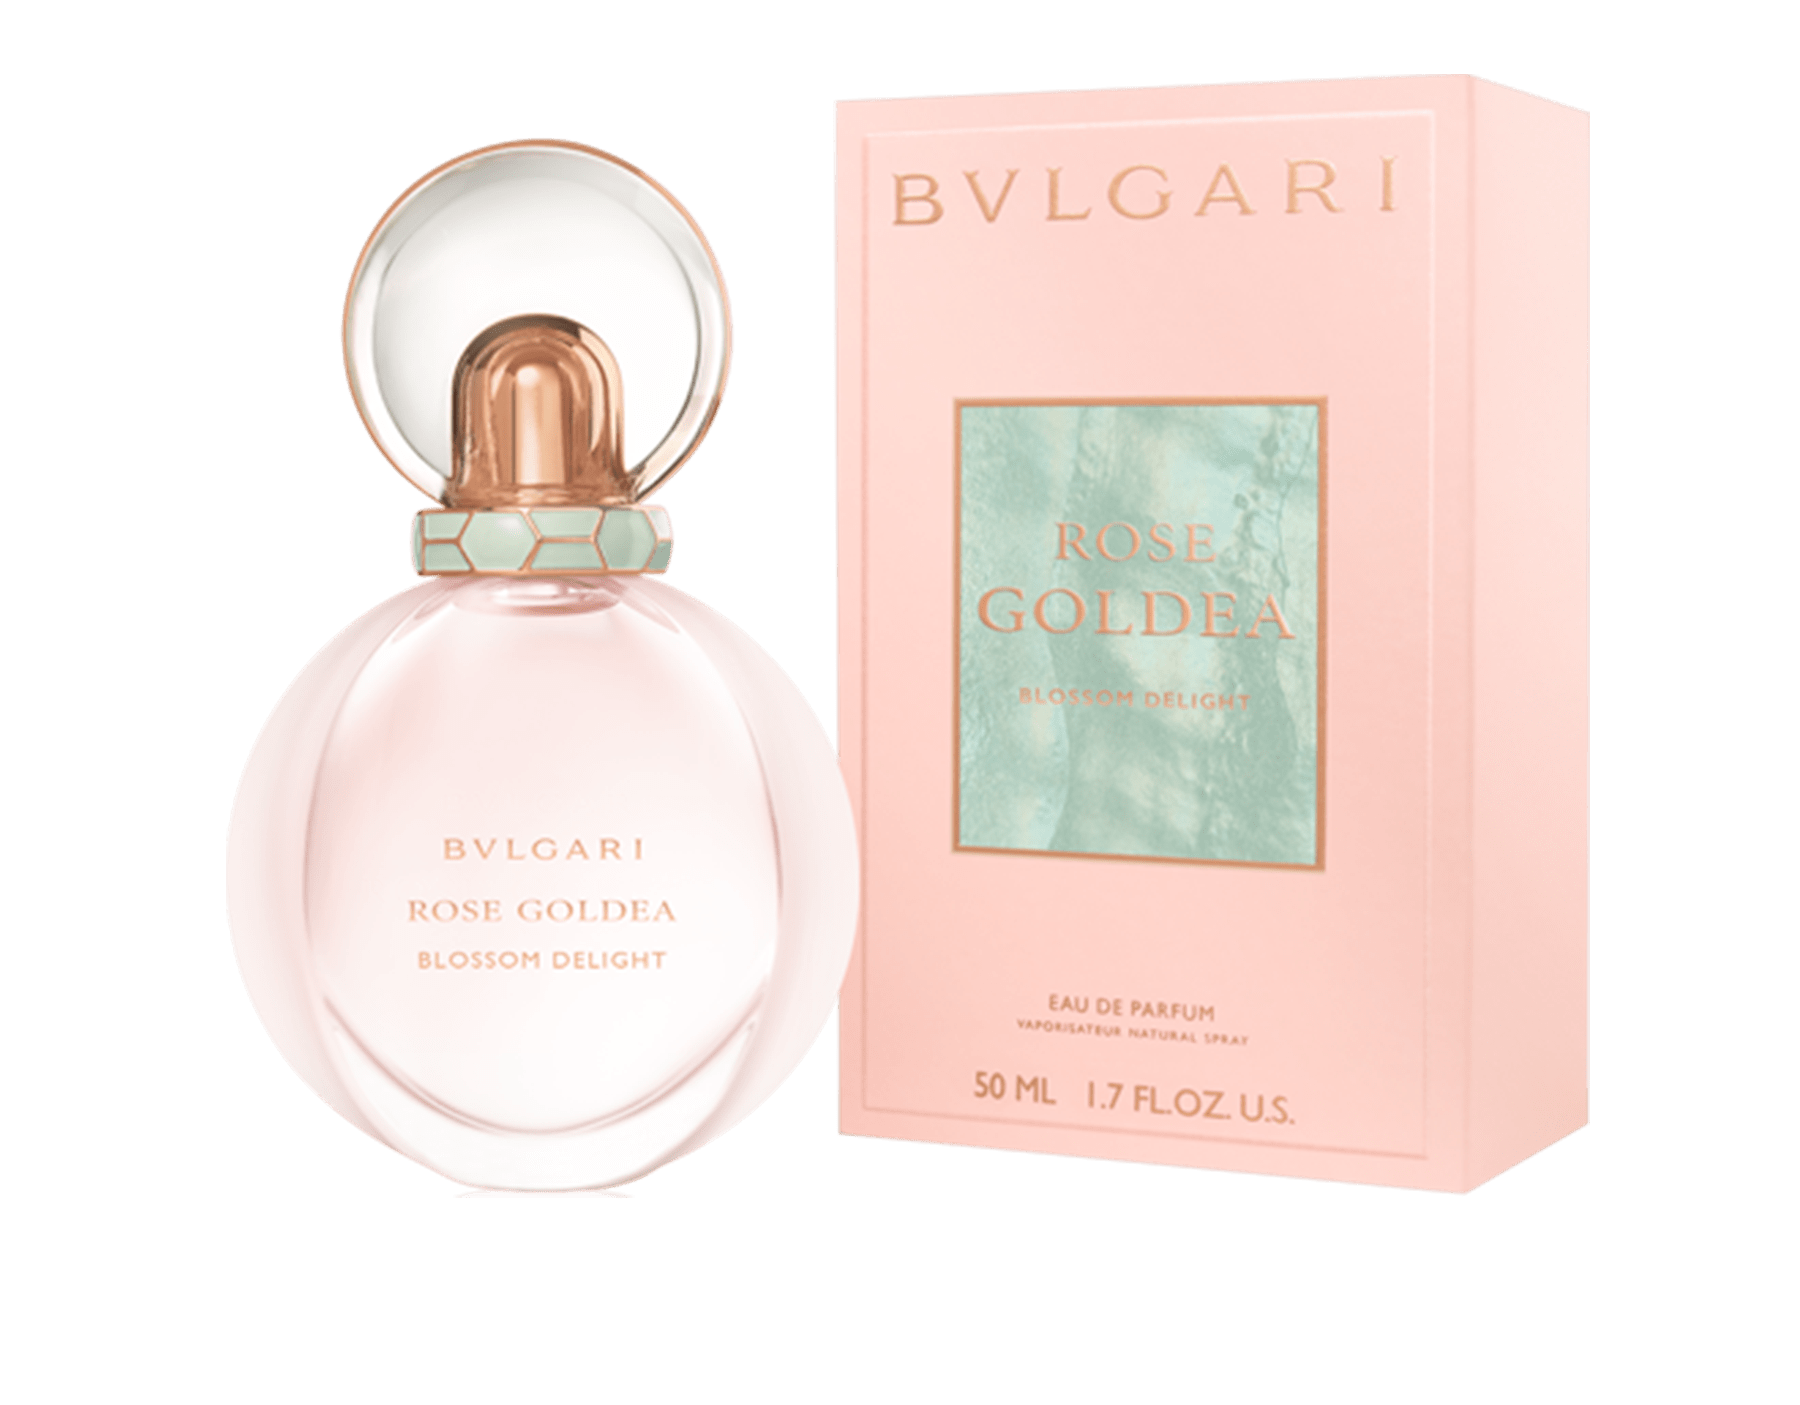 bvlgari perfume goldea rose